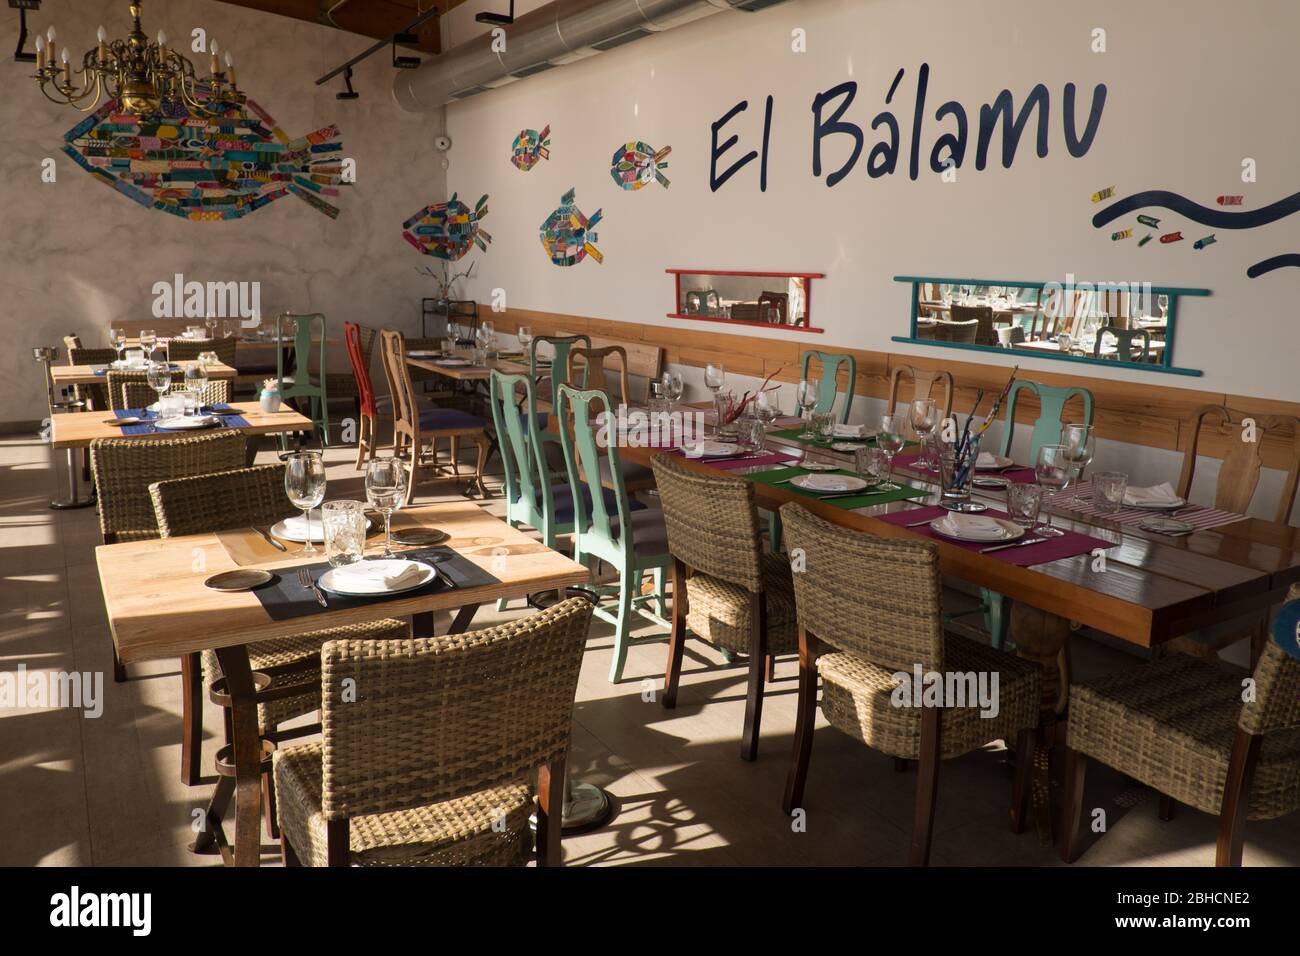 El Bálamu fish restaurant in Llanes, Asturias, northern Spain Stock Photo